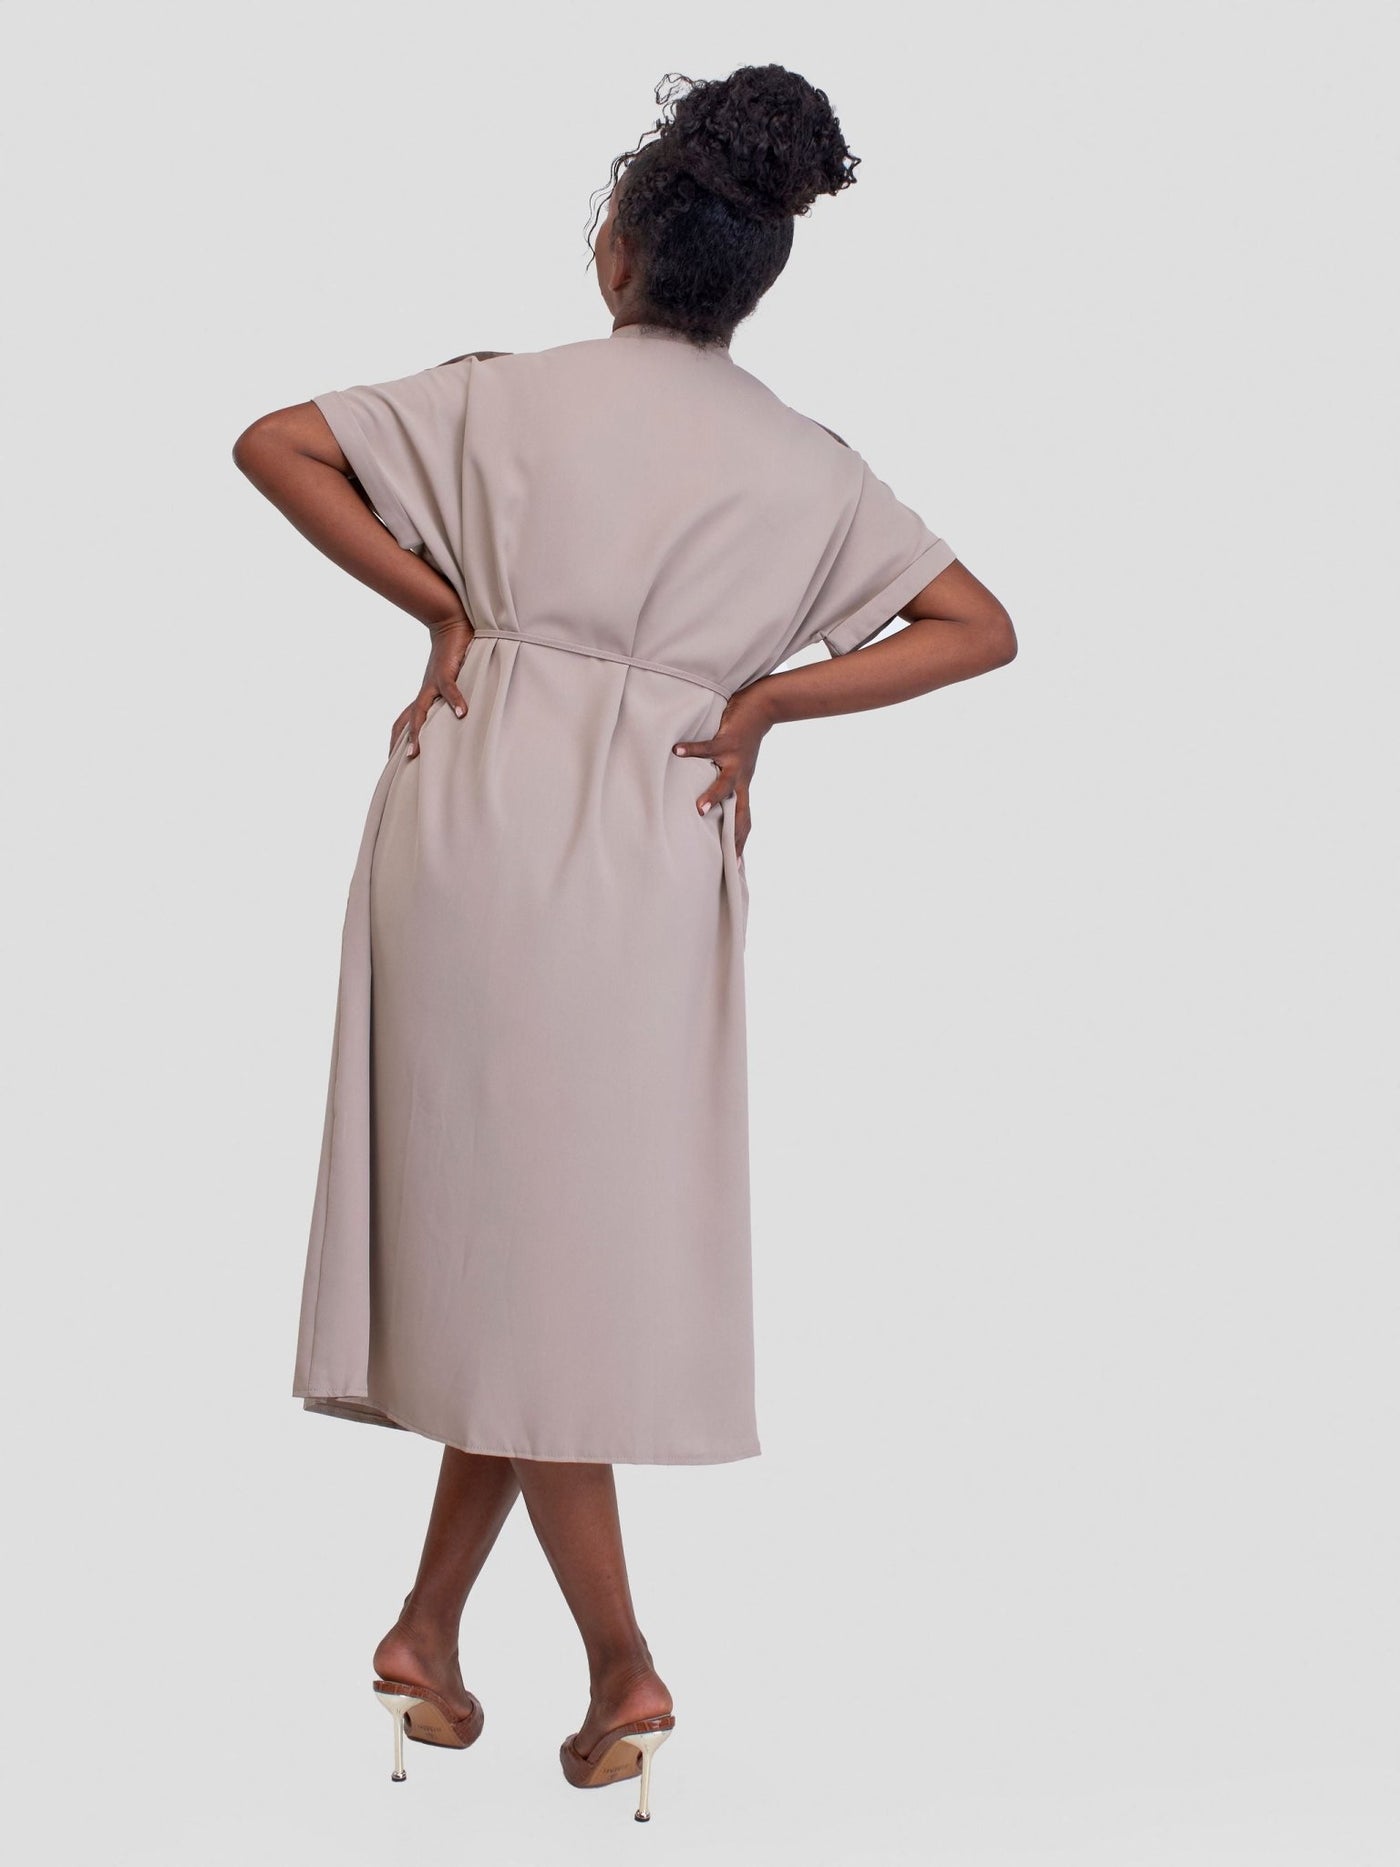 Alara Button Down S/Sleeved With Double Pockets Cargo Like Dress - Beige - Shopzetu